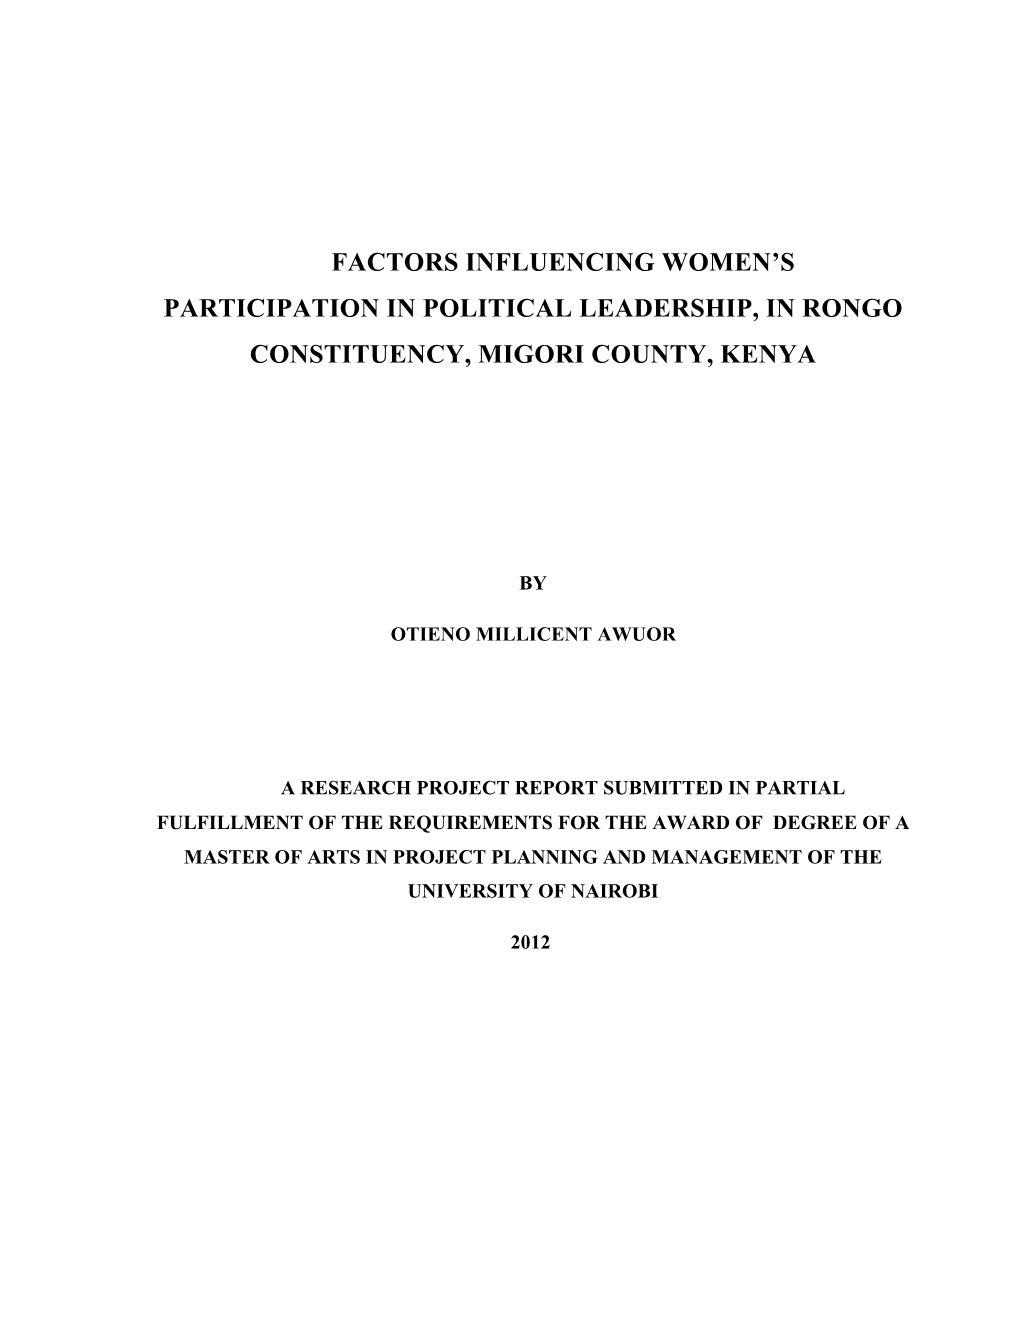 Factors Influencing Women's Participation in Political Leadership